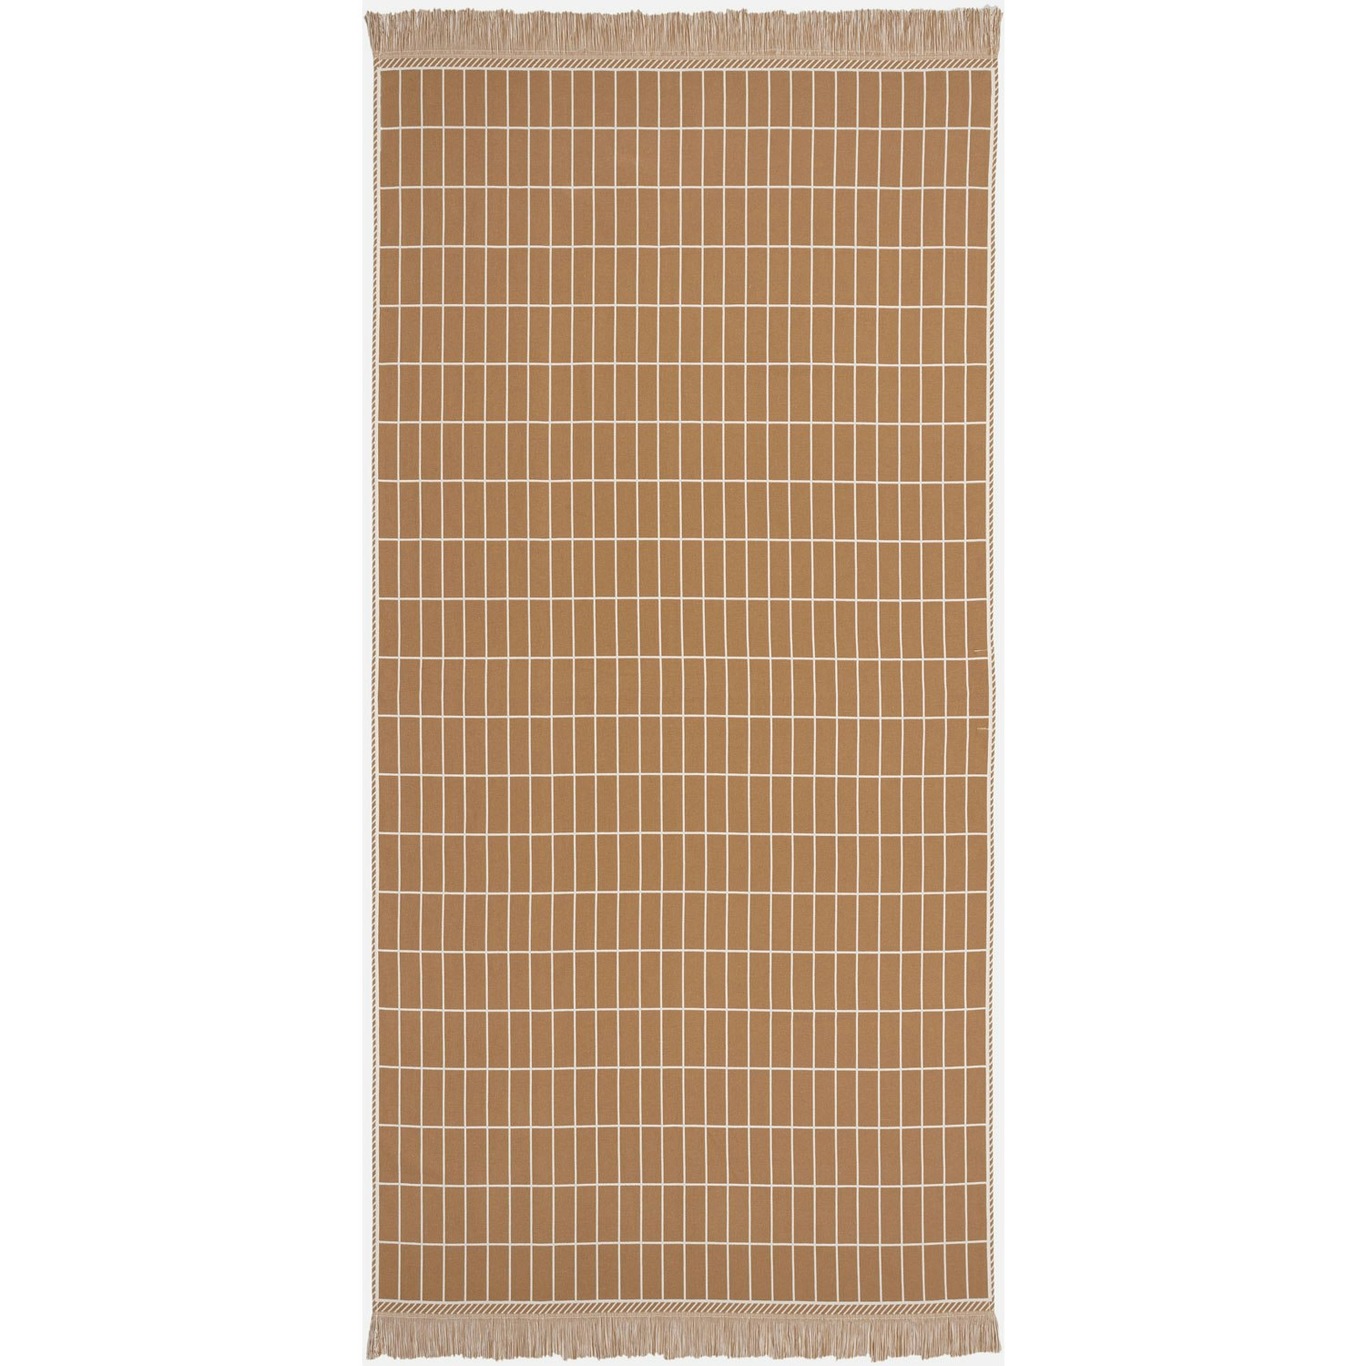 Pieni Tiiliskivi Towel Hamam Brown / Off-white, 70x150 cm